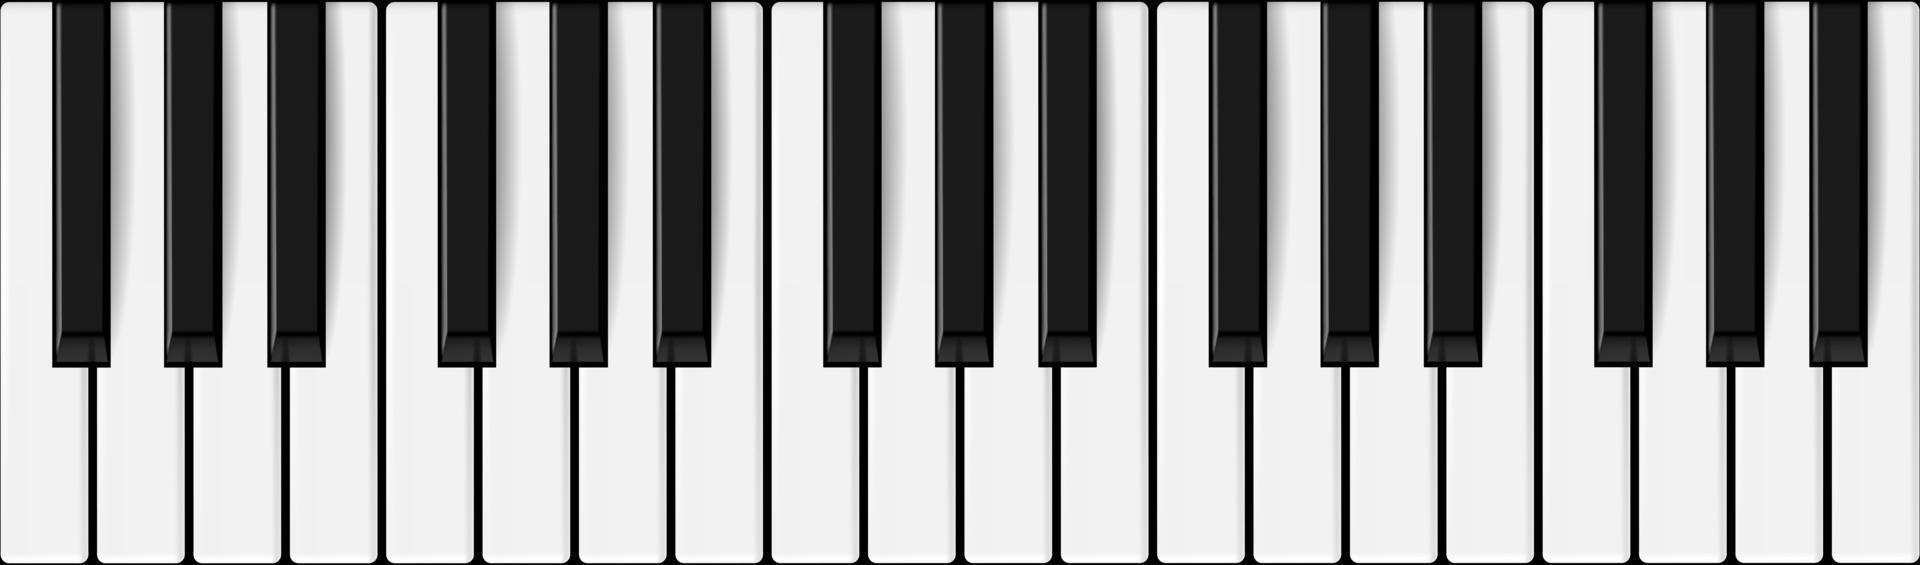 vektor realistisk piano nycklar. musik tema design.